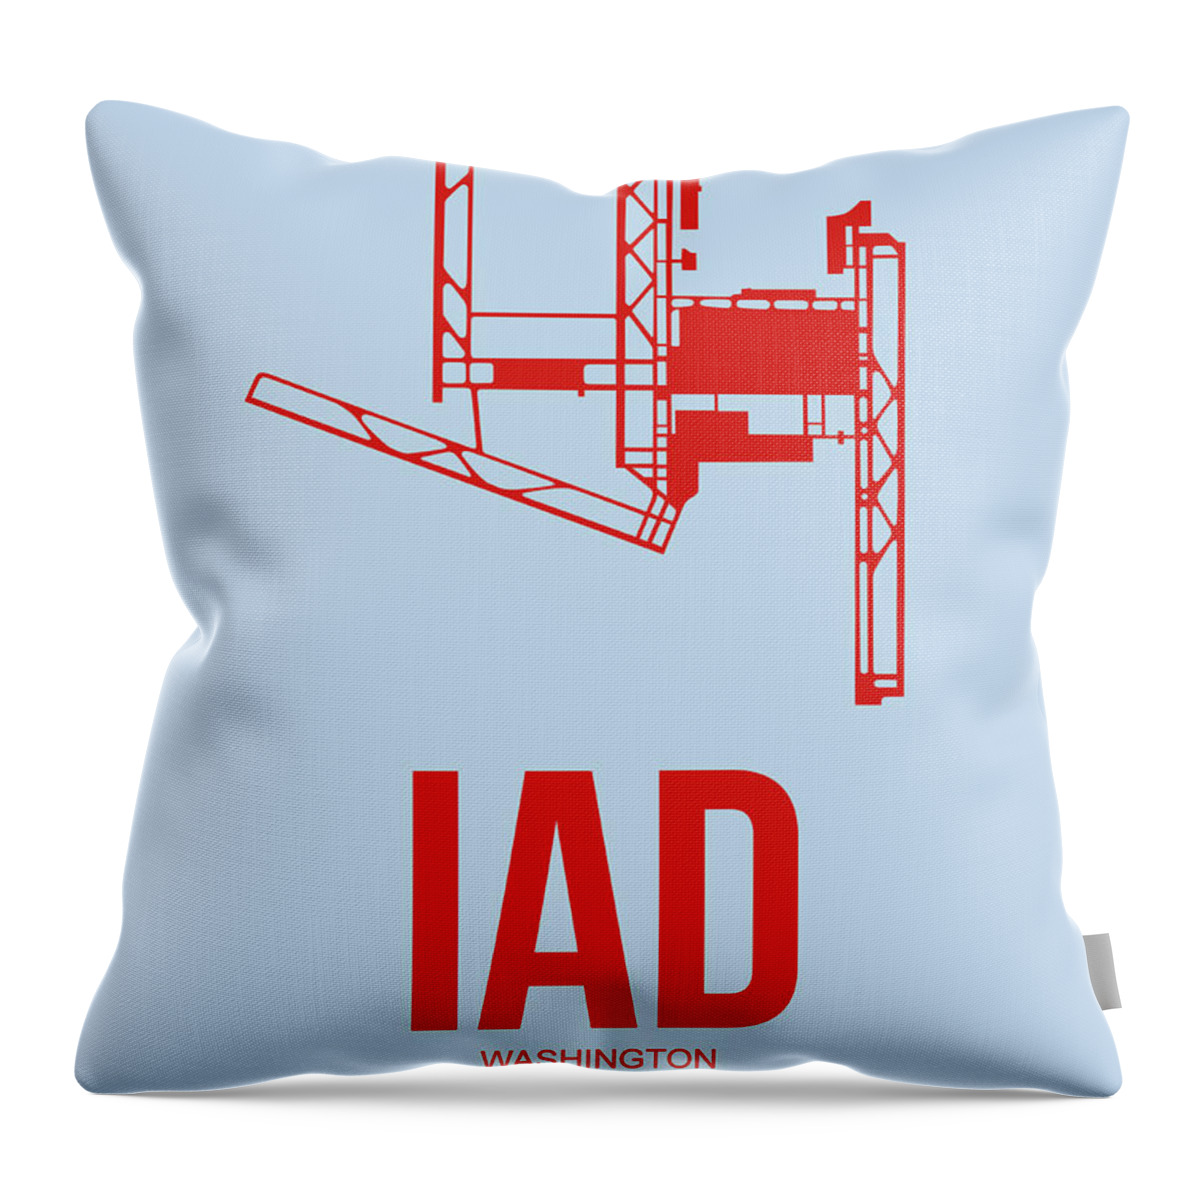 Washington D.c. Throw Pillow featuring the digital art IAD Washington Airport Poster 2 by Naxart Studio